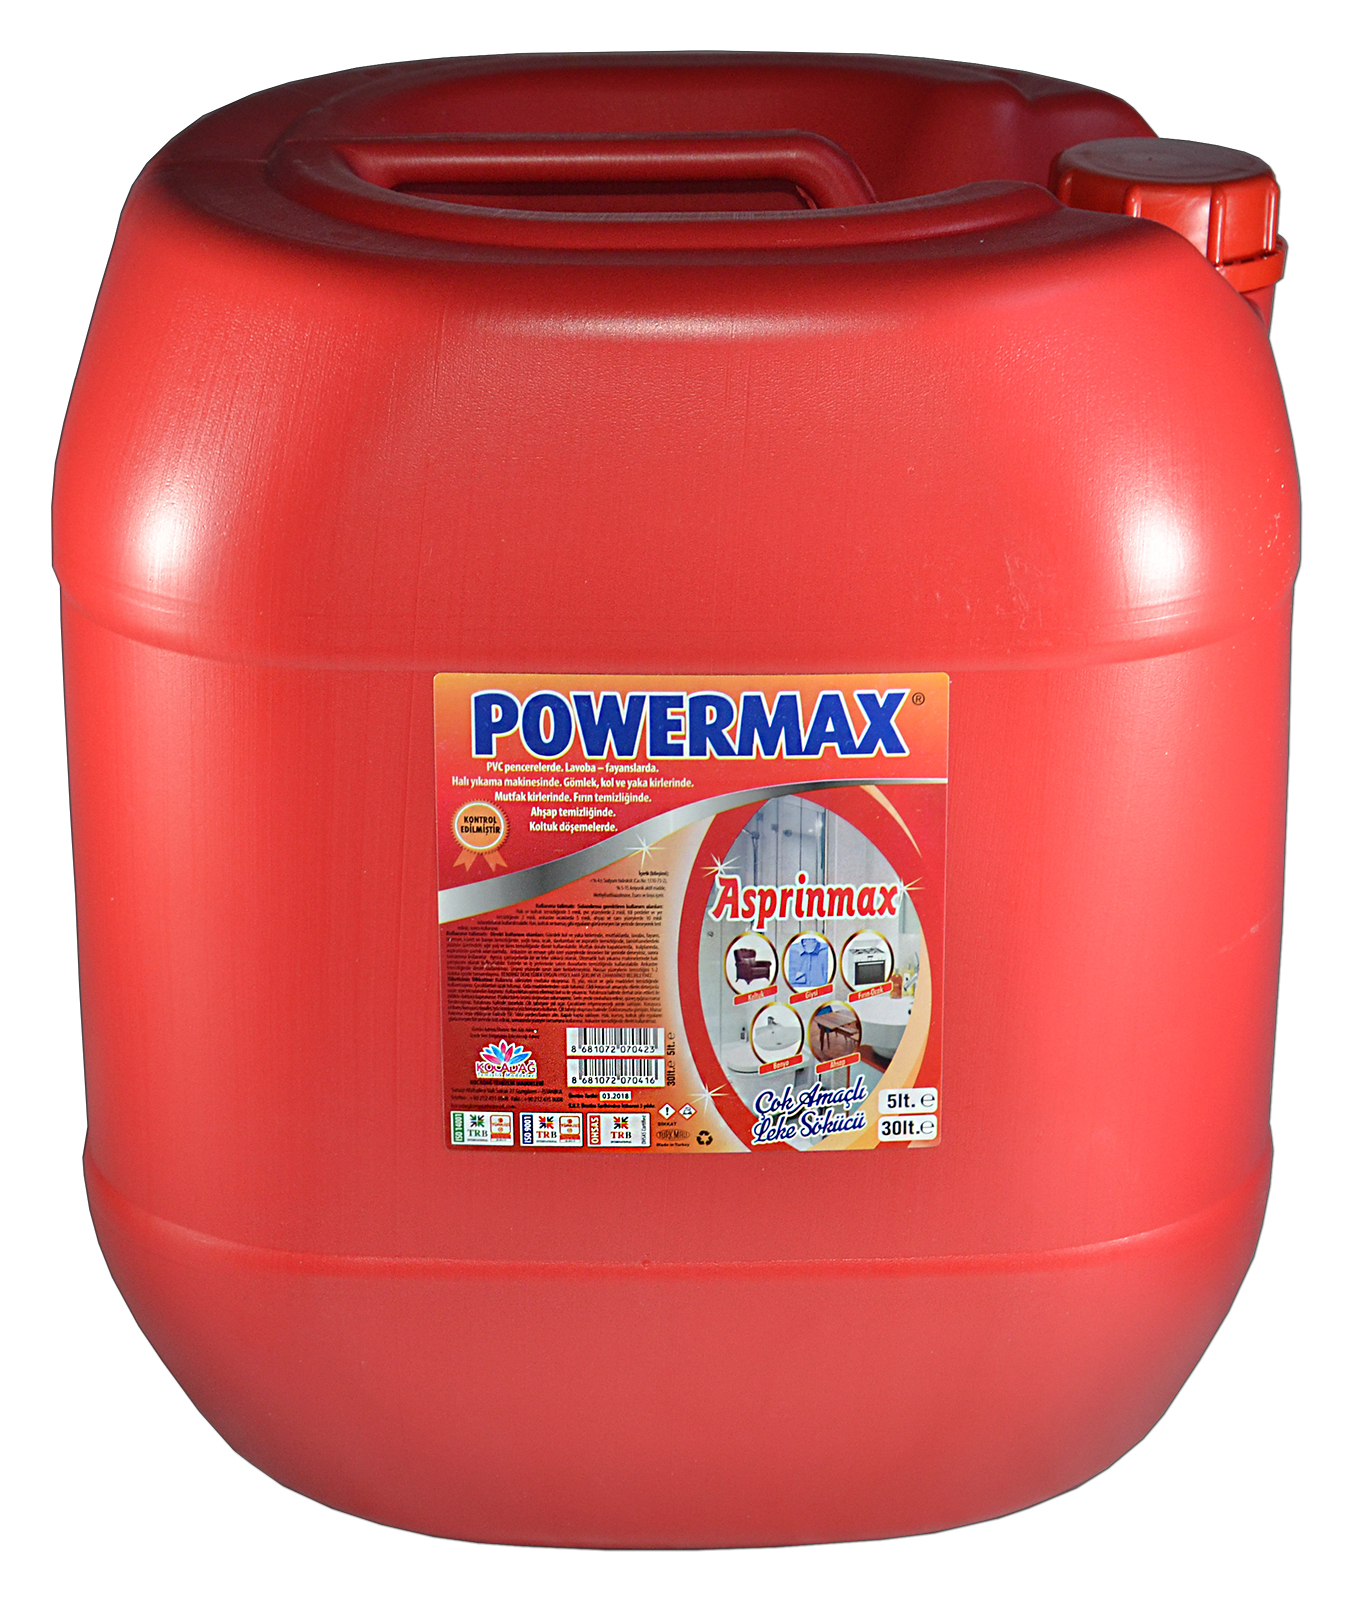 Powermax Asprinmax 30 lt